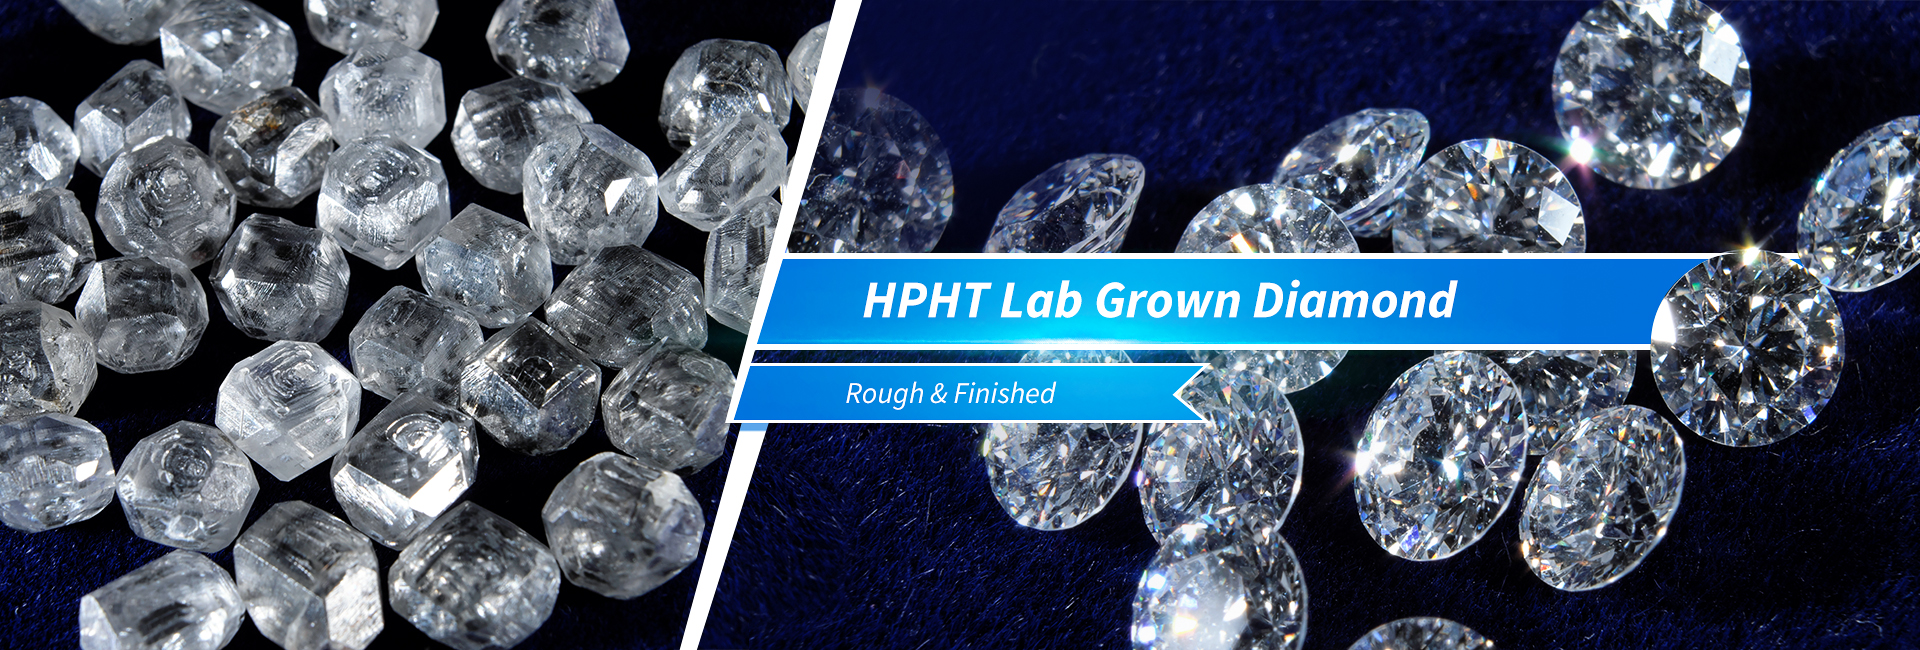 Hpht Large Size Synthetic Rough Diamond Stones - China Diamond